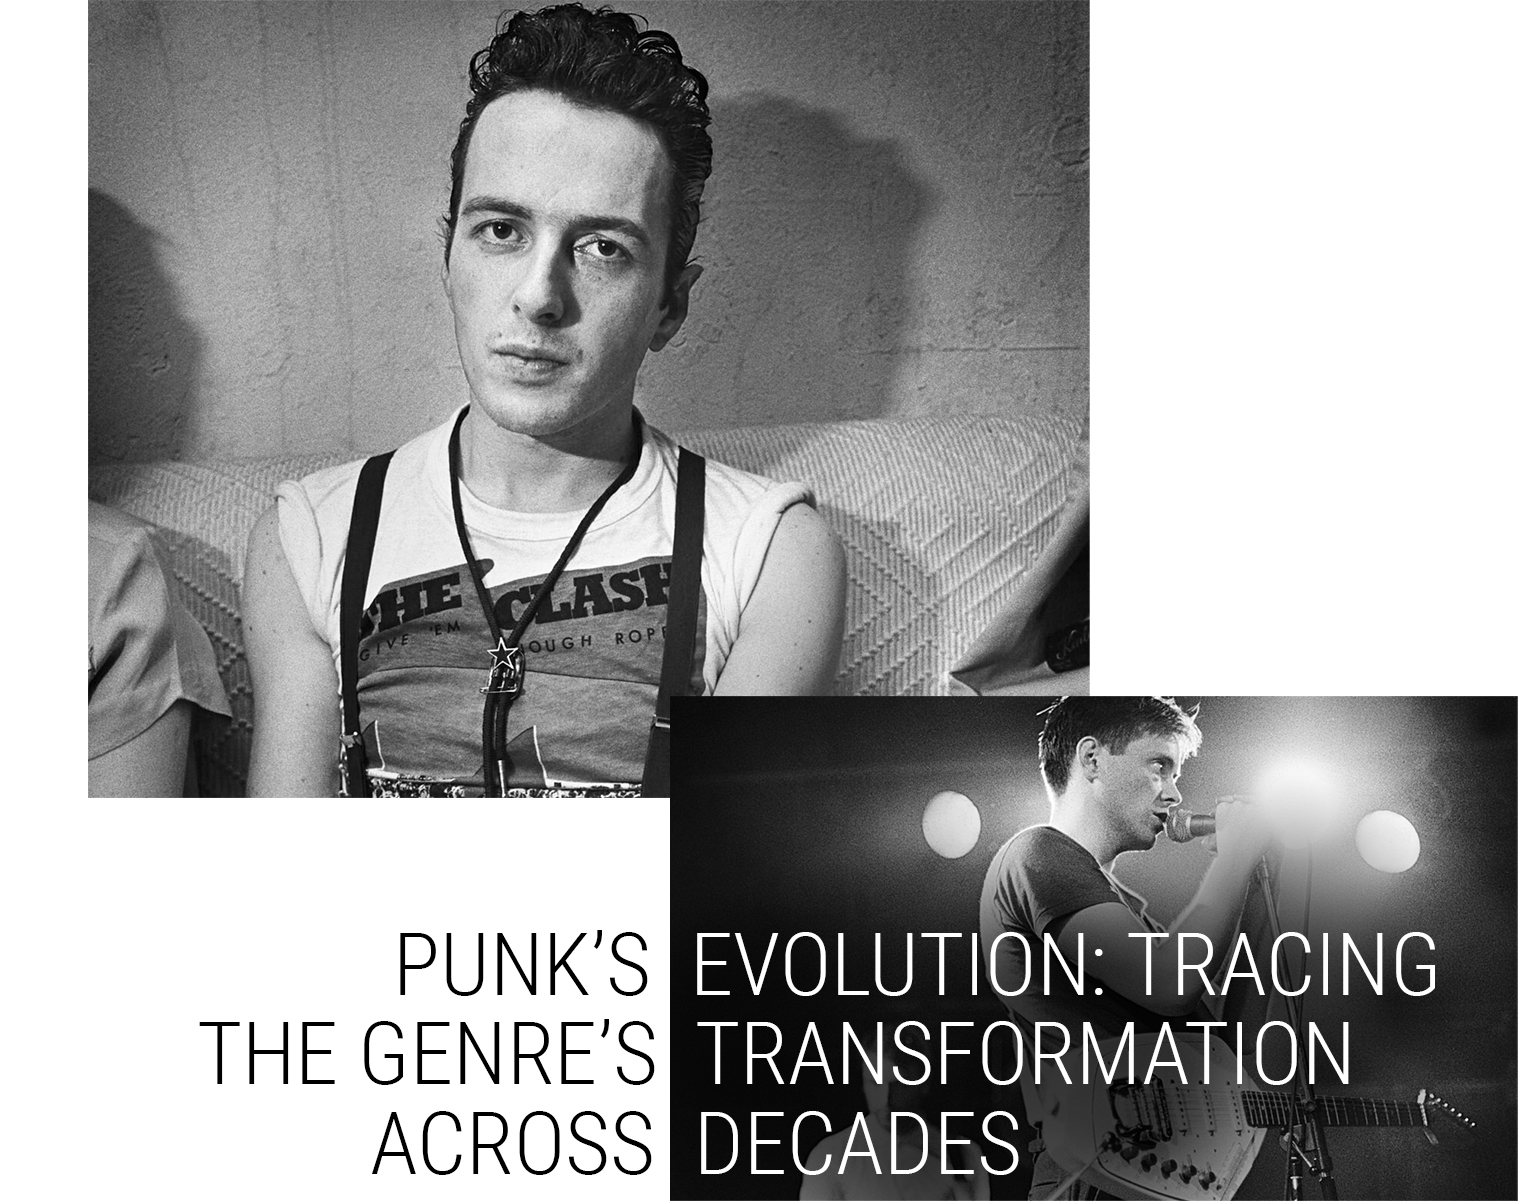 Punks-Evolution-Tracing-the-Genres-Transformation-Across-Decades_header3.jpg